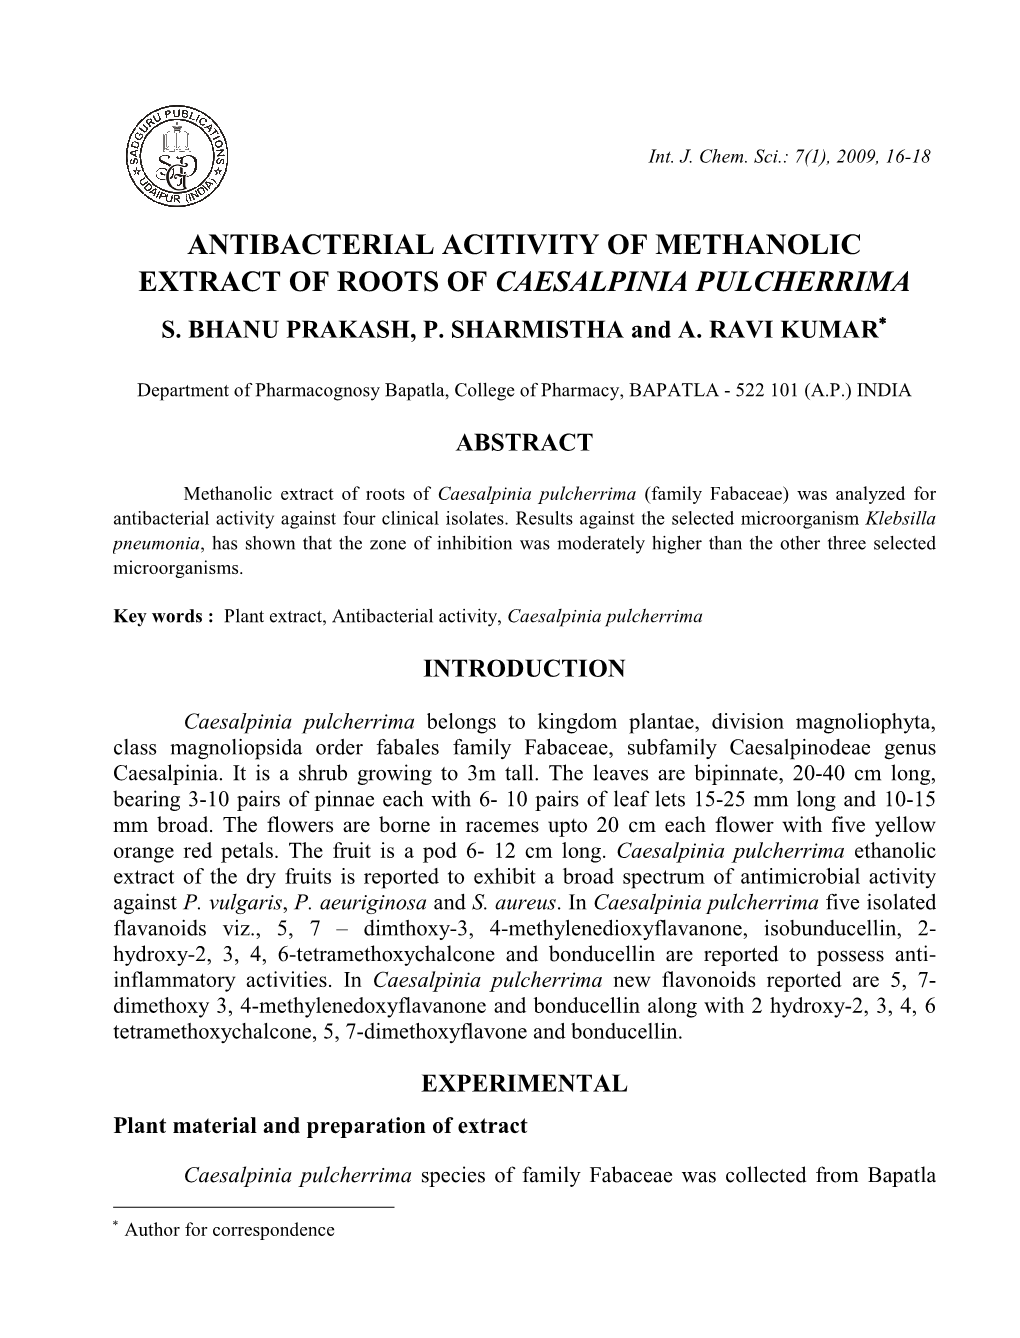 Antibacterial Acitivity of Methanolic Extract of Roots of Caesalpinia Pulcherrima S